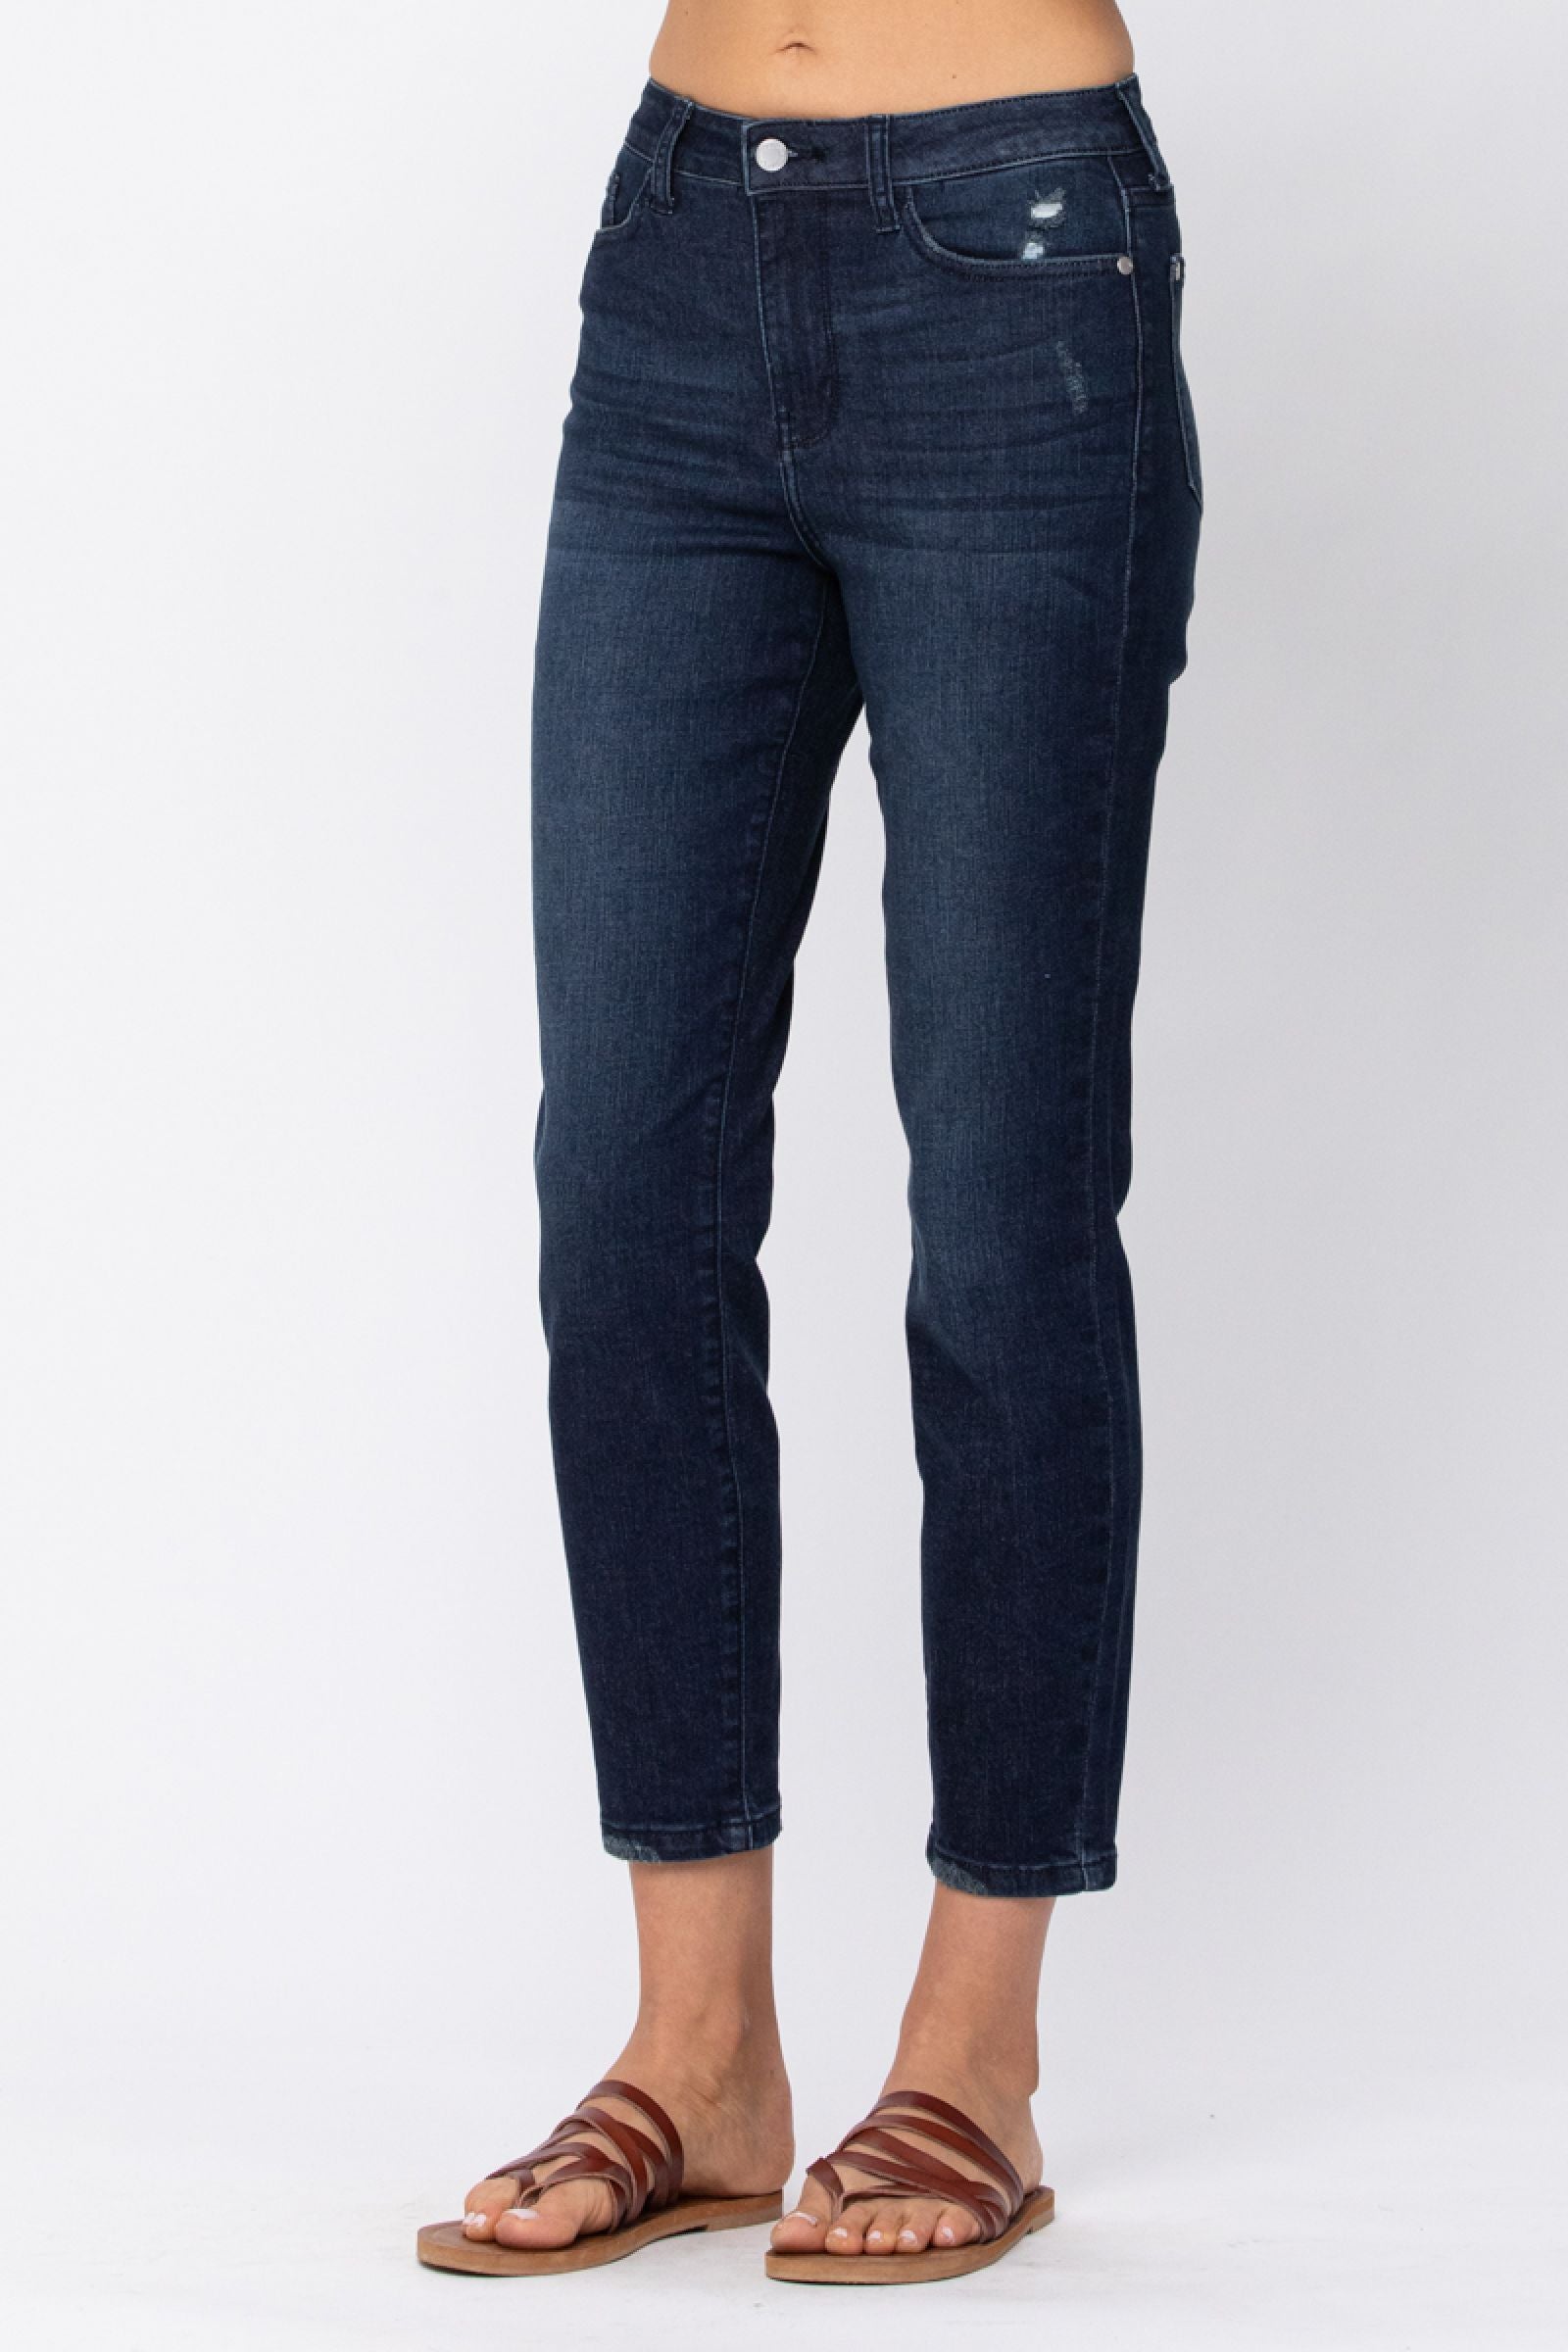 oplukker Psykologisk Bonde Judy Blue Dark Wash Boyfriend Jeans - Style 8114 Online Exclusive - Truly  Simple Boutique